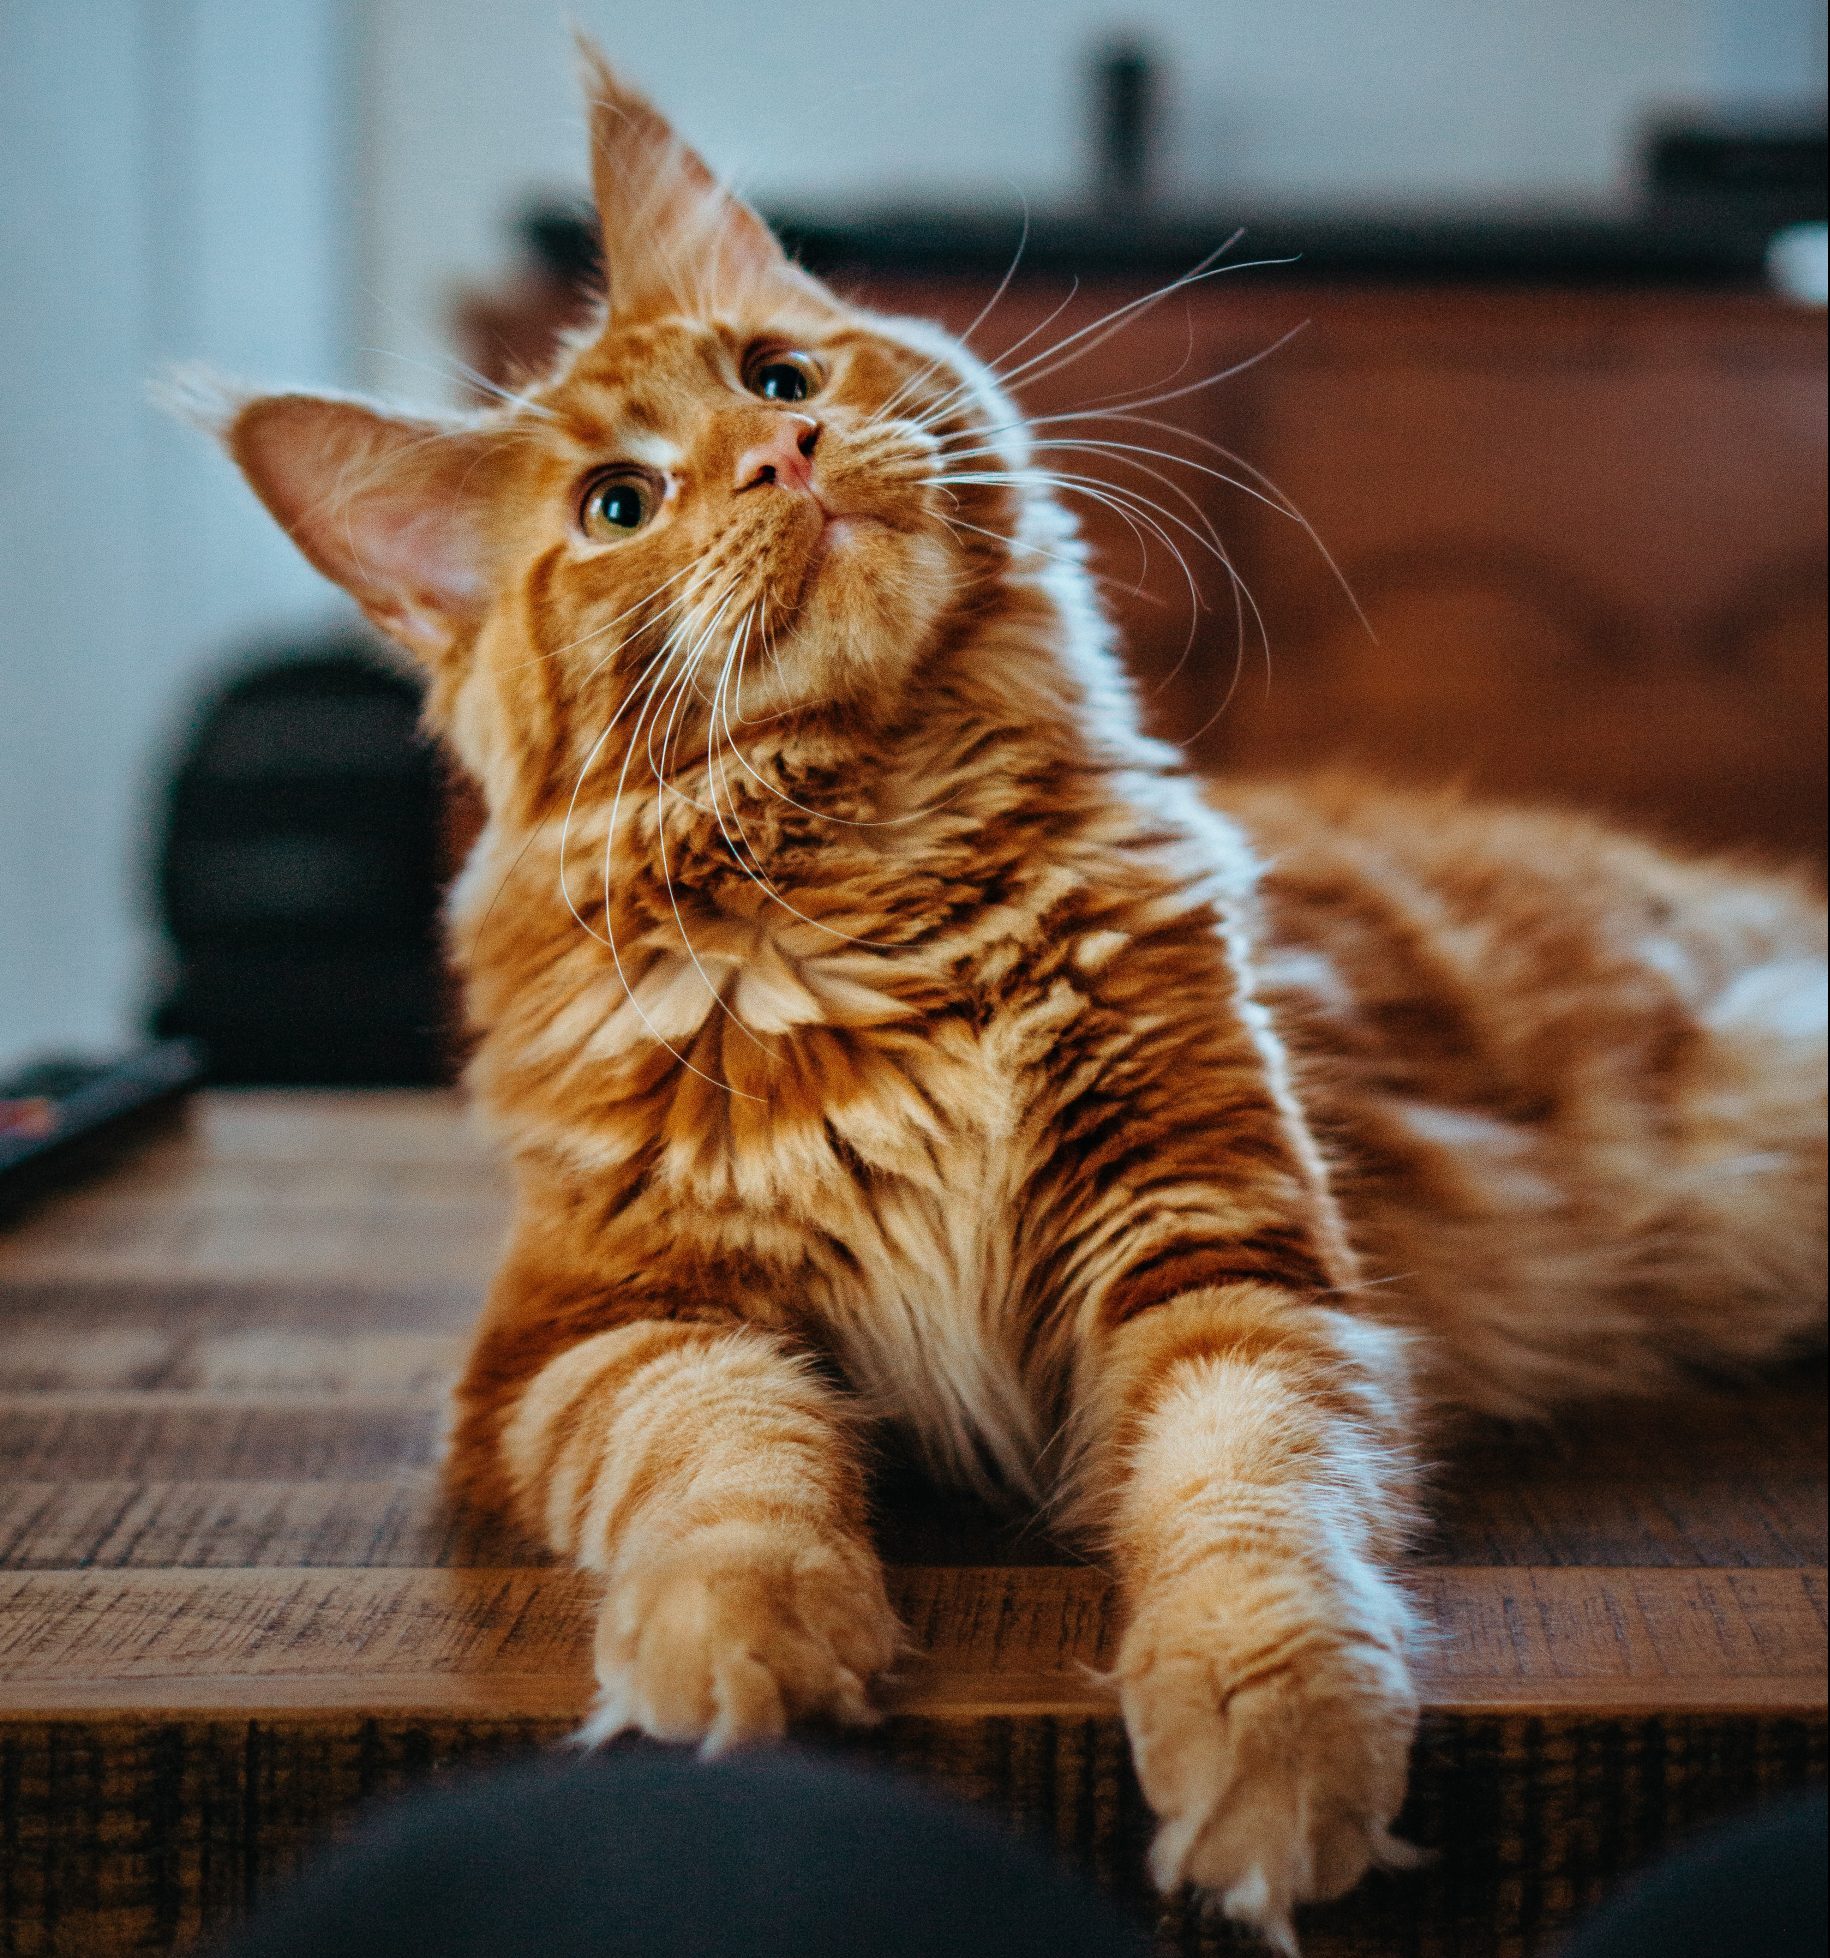 Fluffy orange cat, looking up